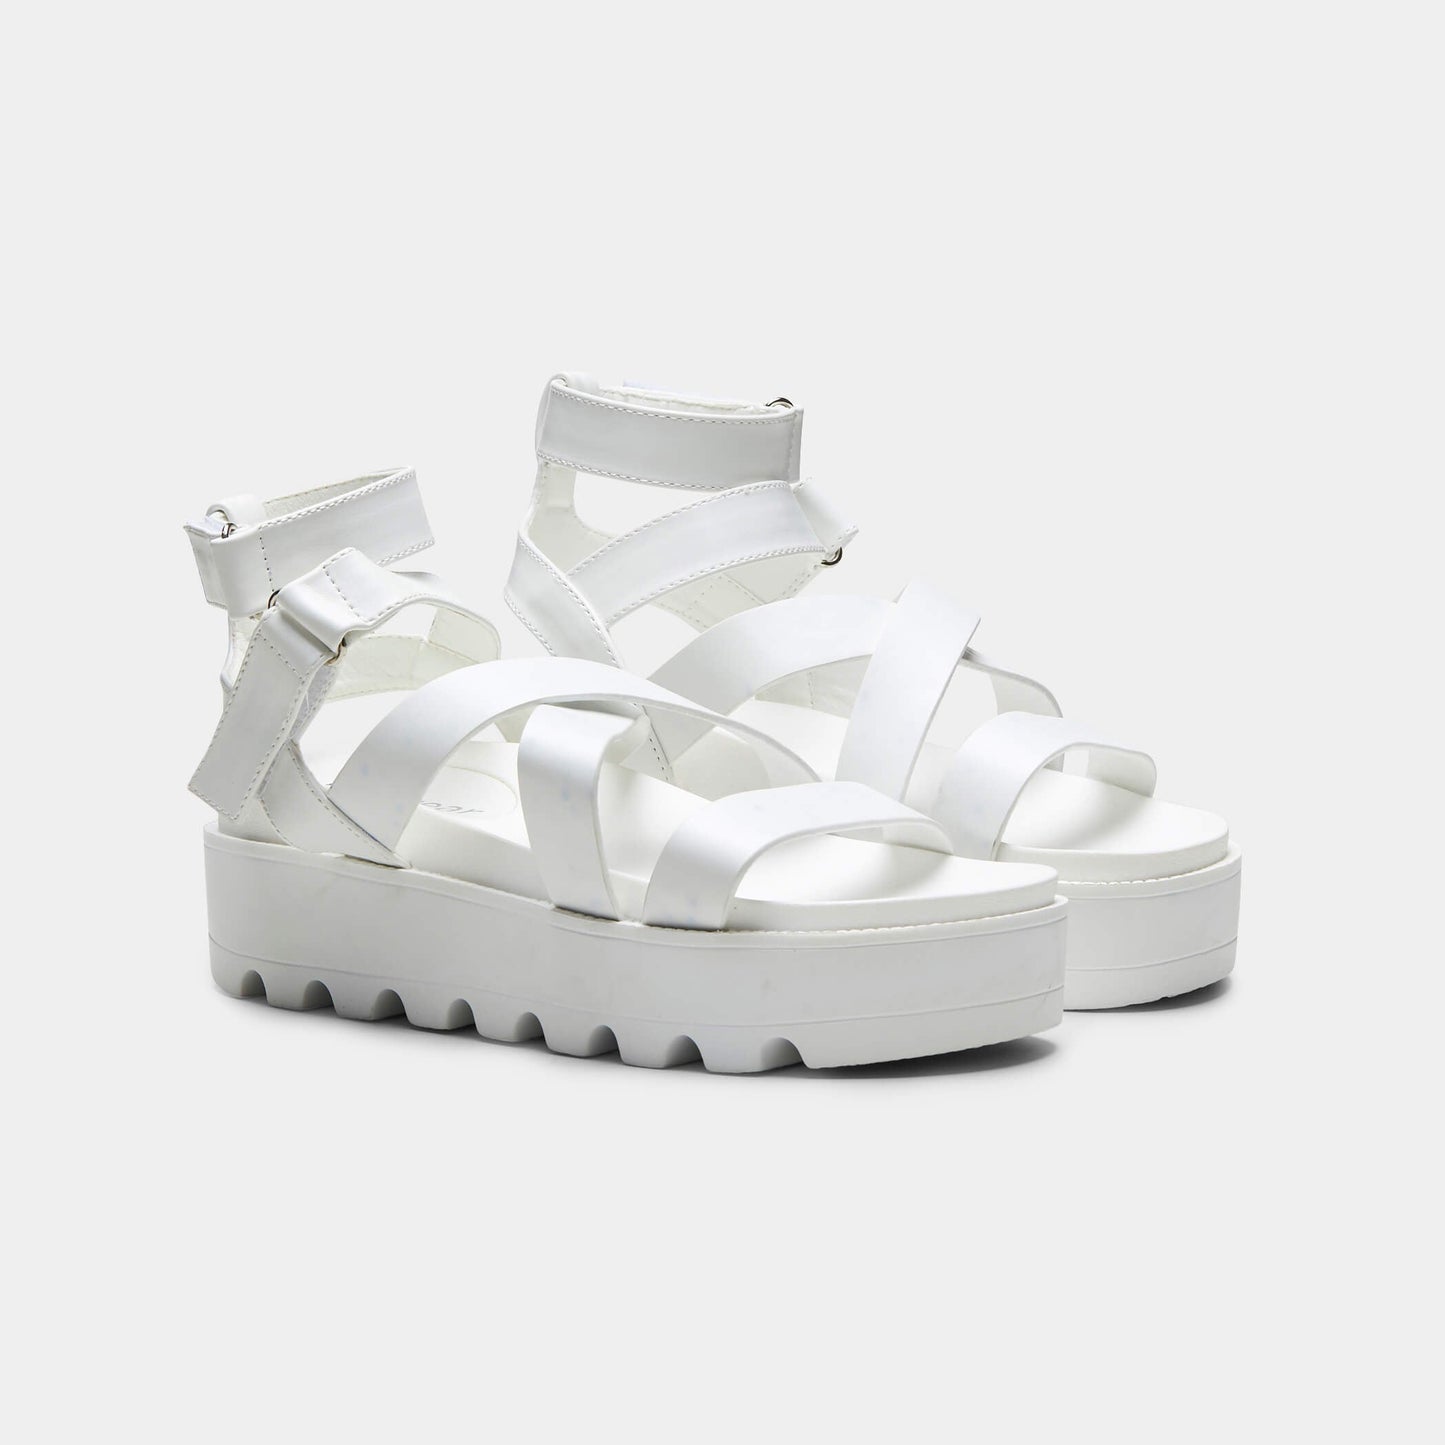 CRIX White Chunky Flatform Sandals - Sandals - KOI Footwear - White - Three-Quarter View